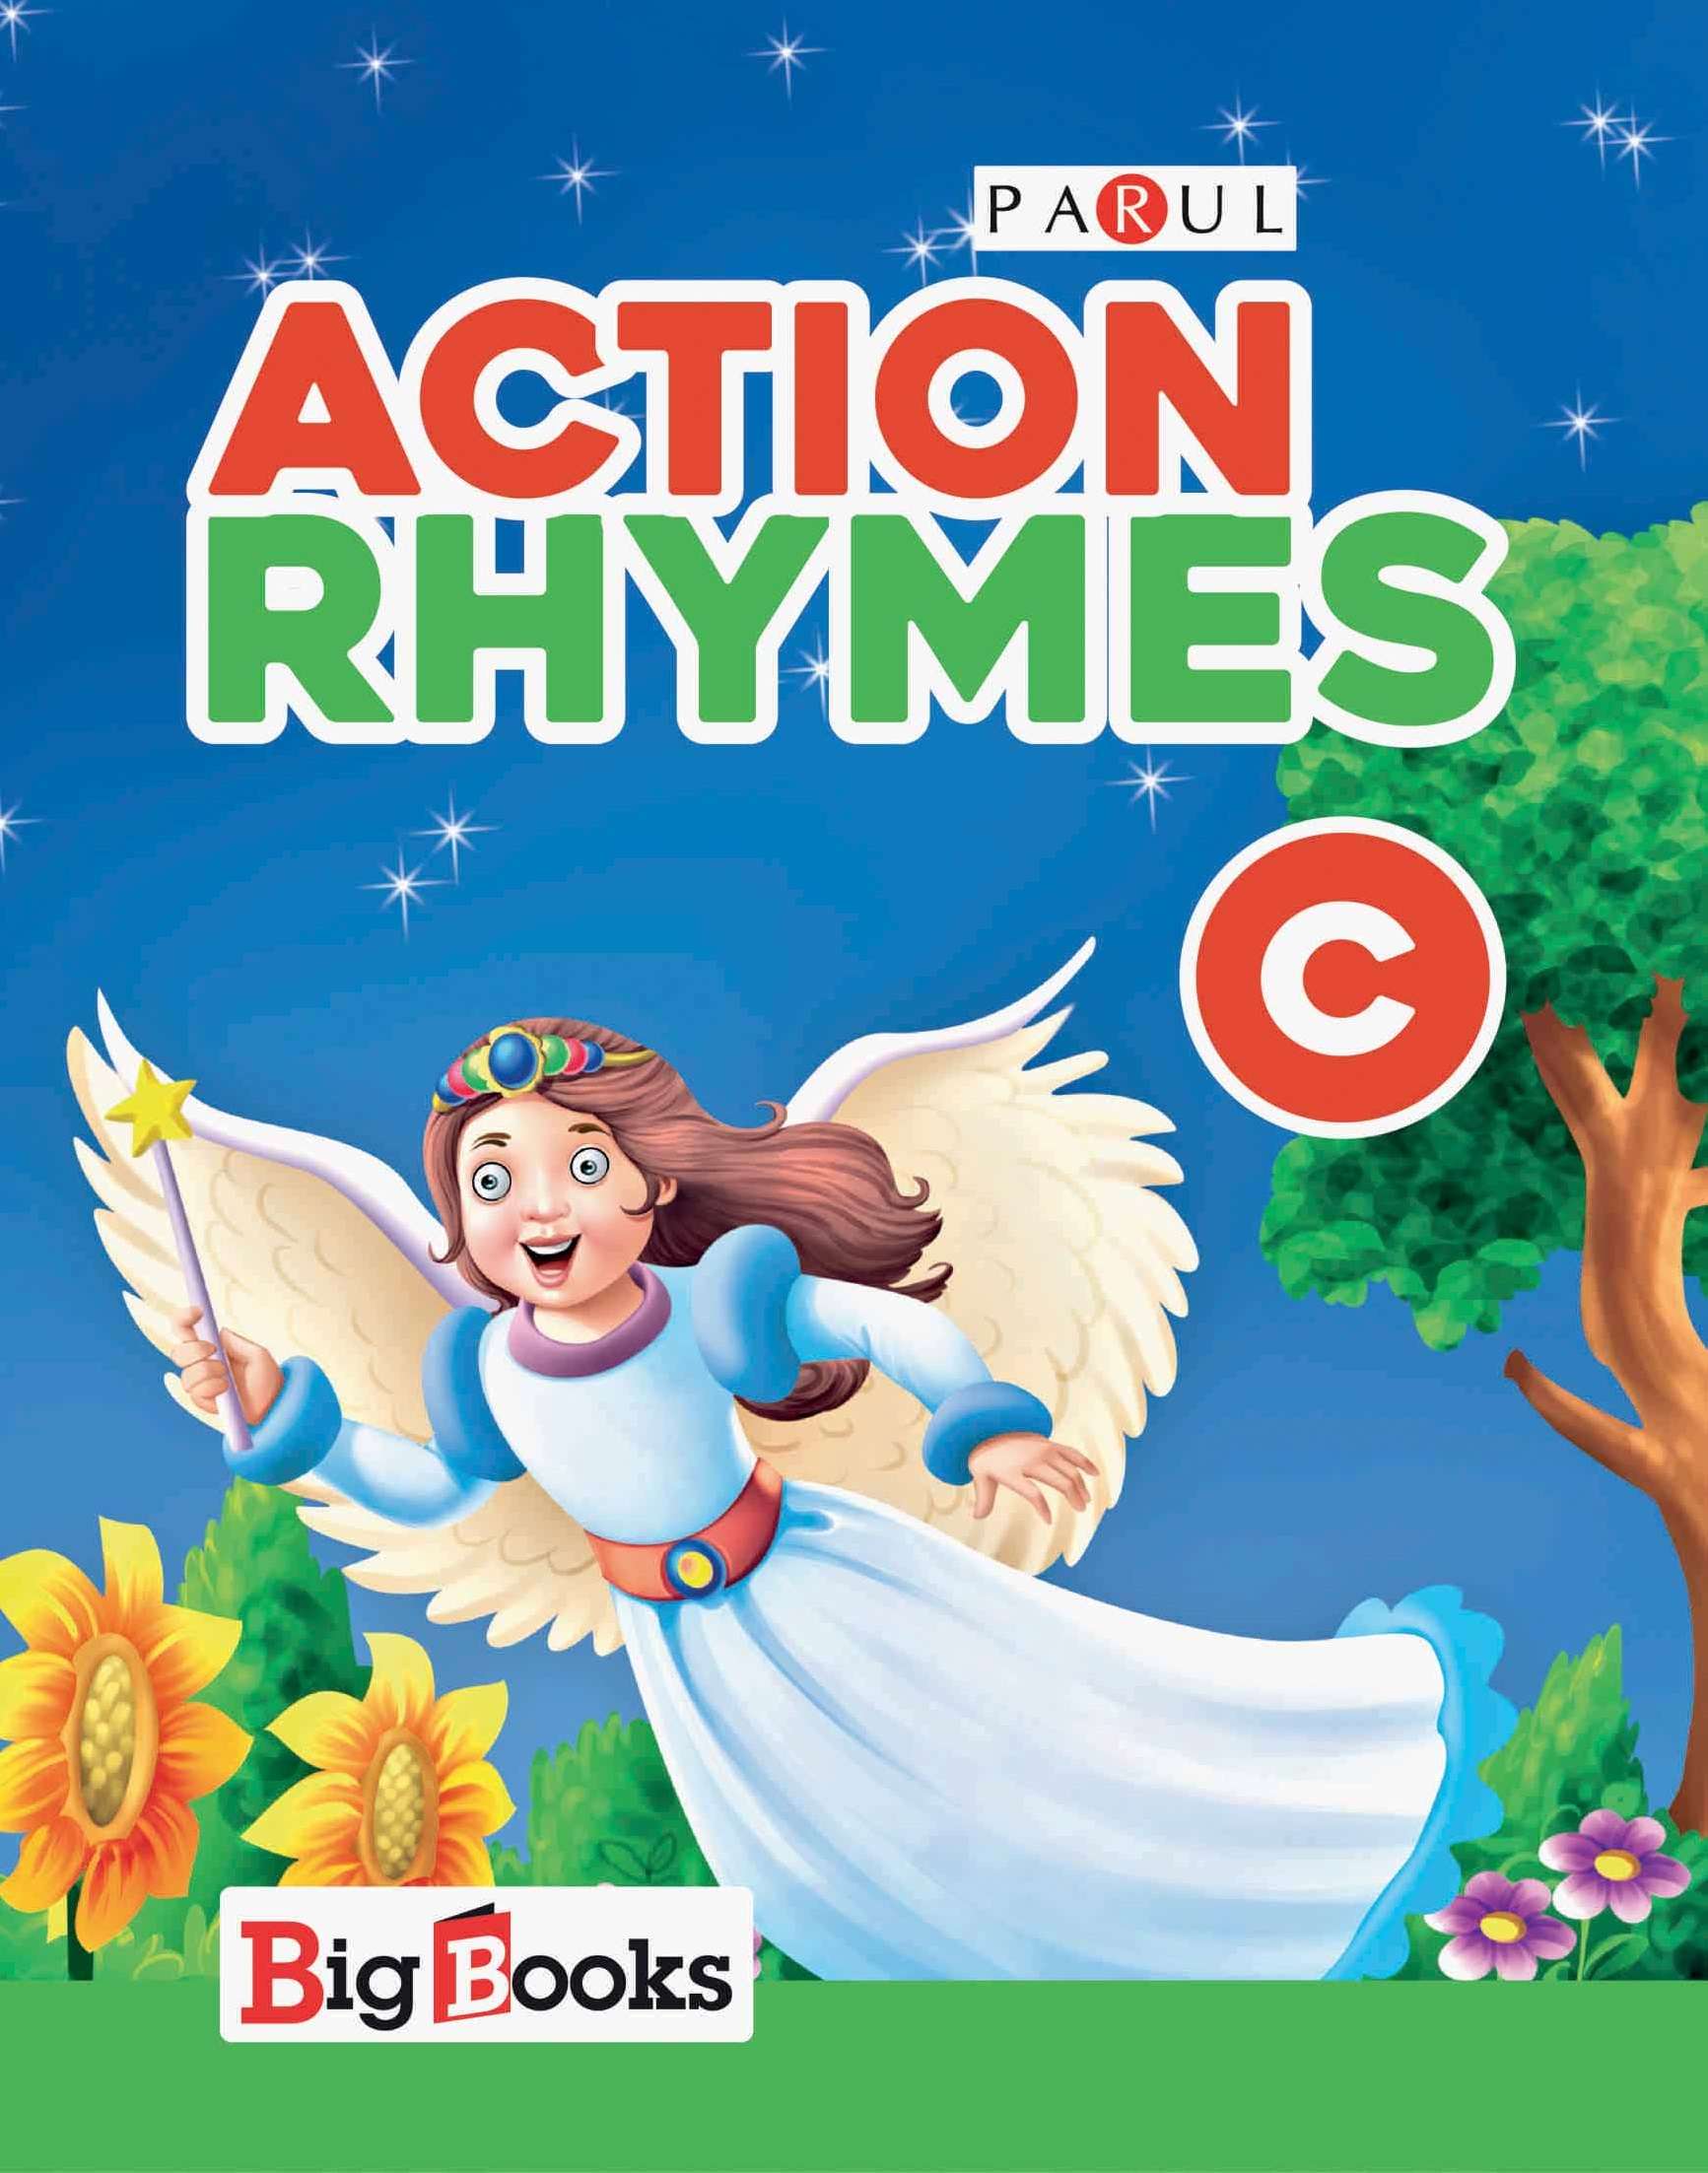 Buy Rhymes book for 3